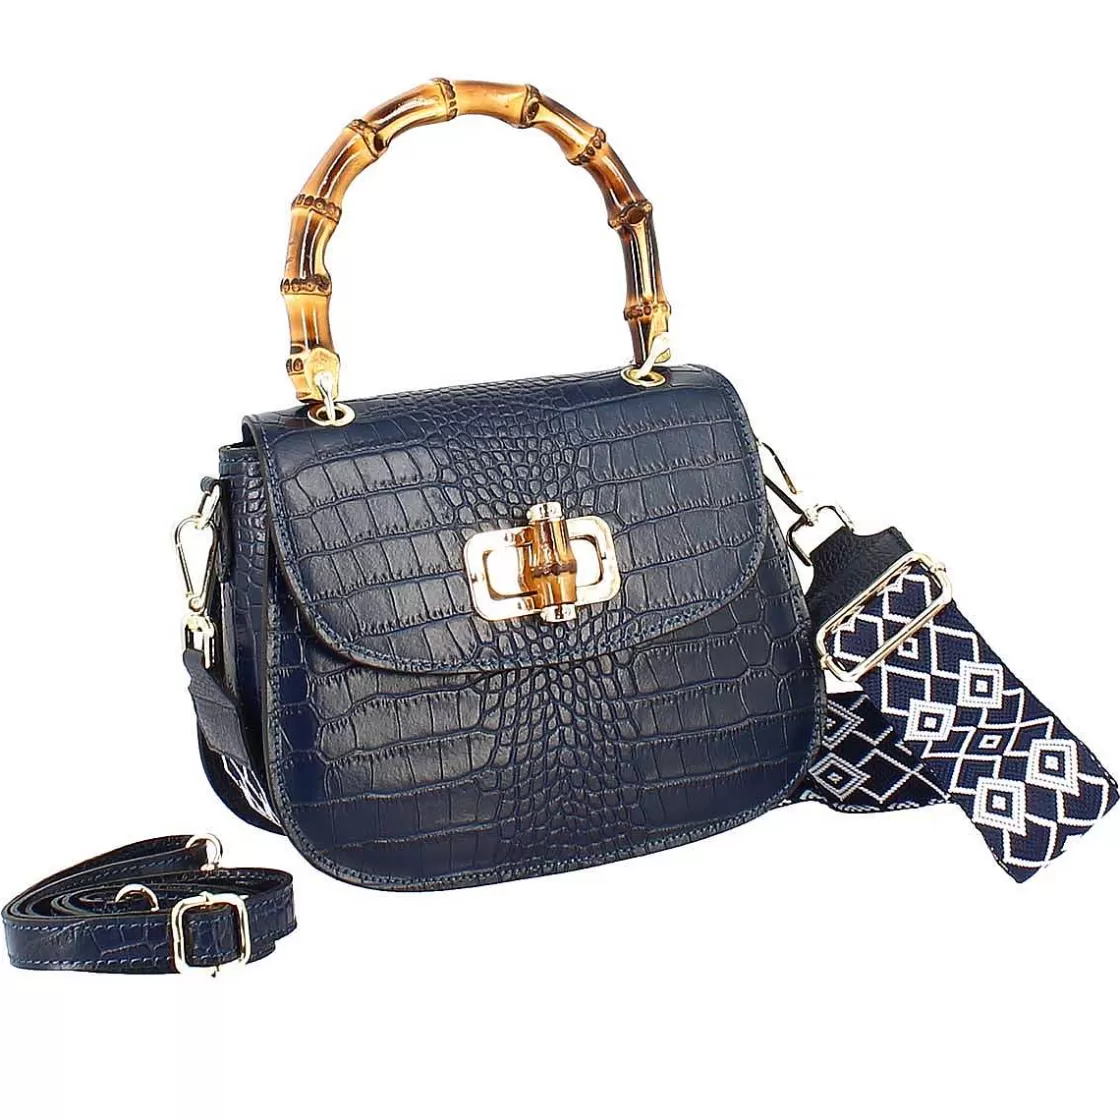 Leonardo Handmade Women'S Handbag In Blue Leather With Removable Shoulder Strap Sale